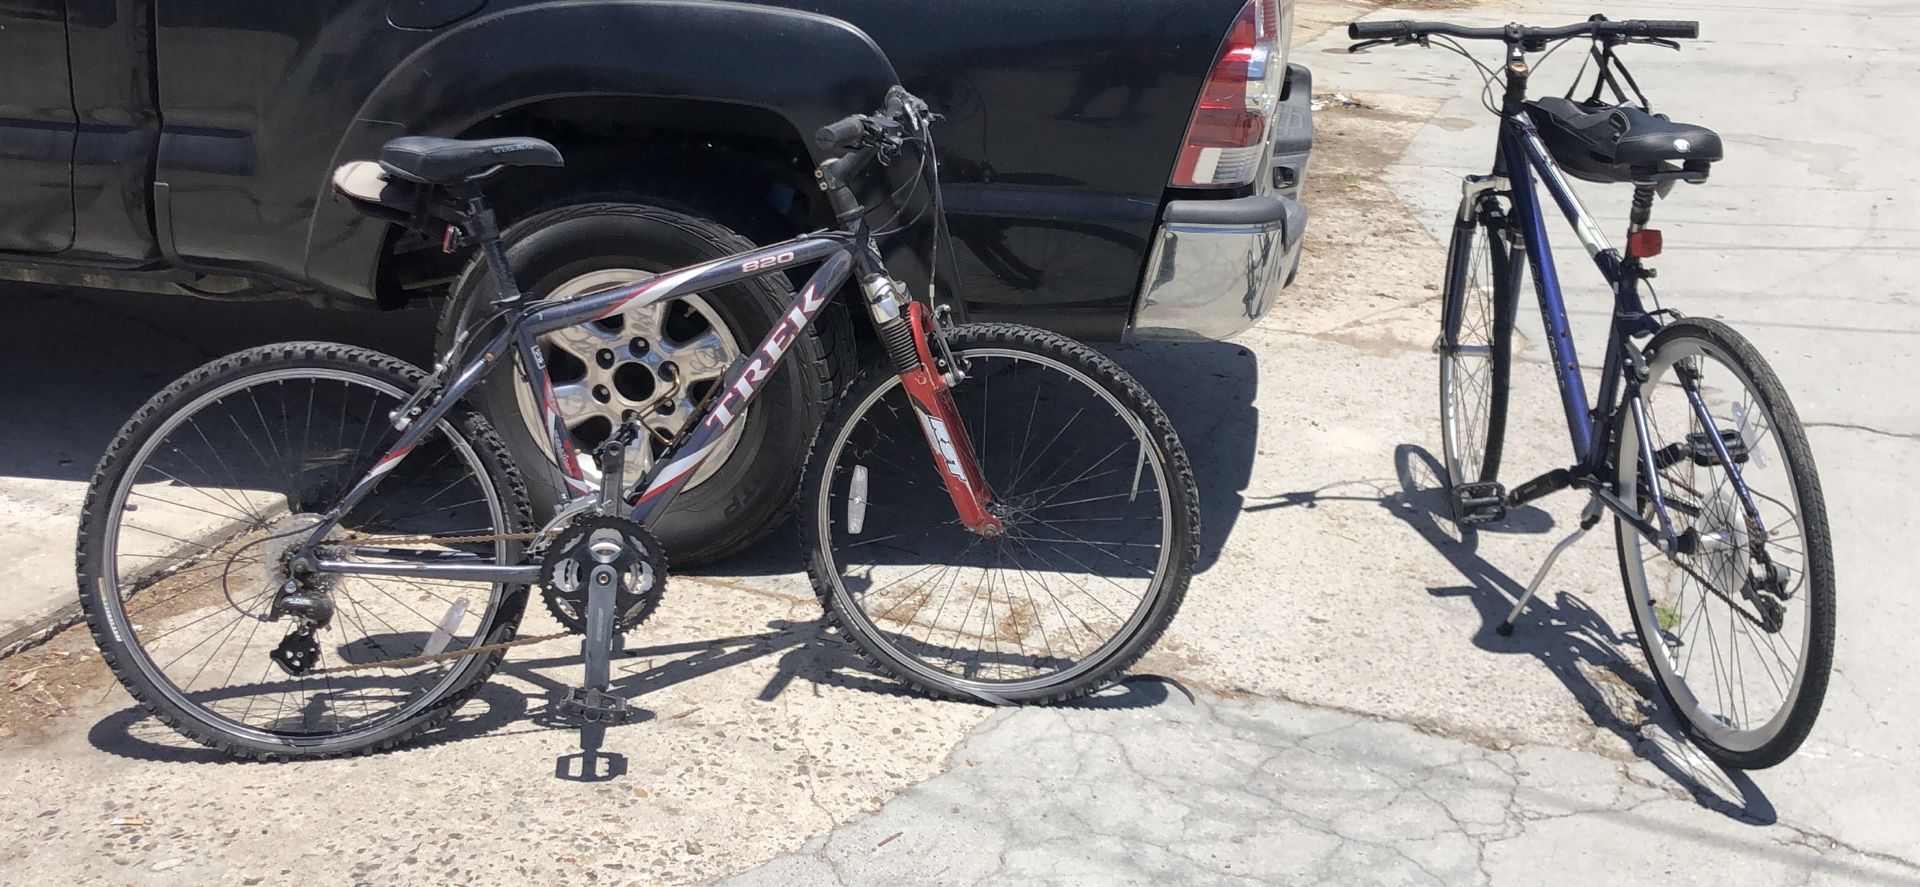 TREK (mountain bike) & SCHWINN two good brands bikes for $400